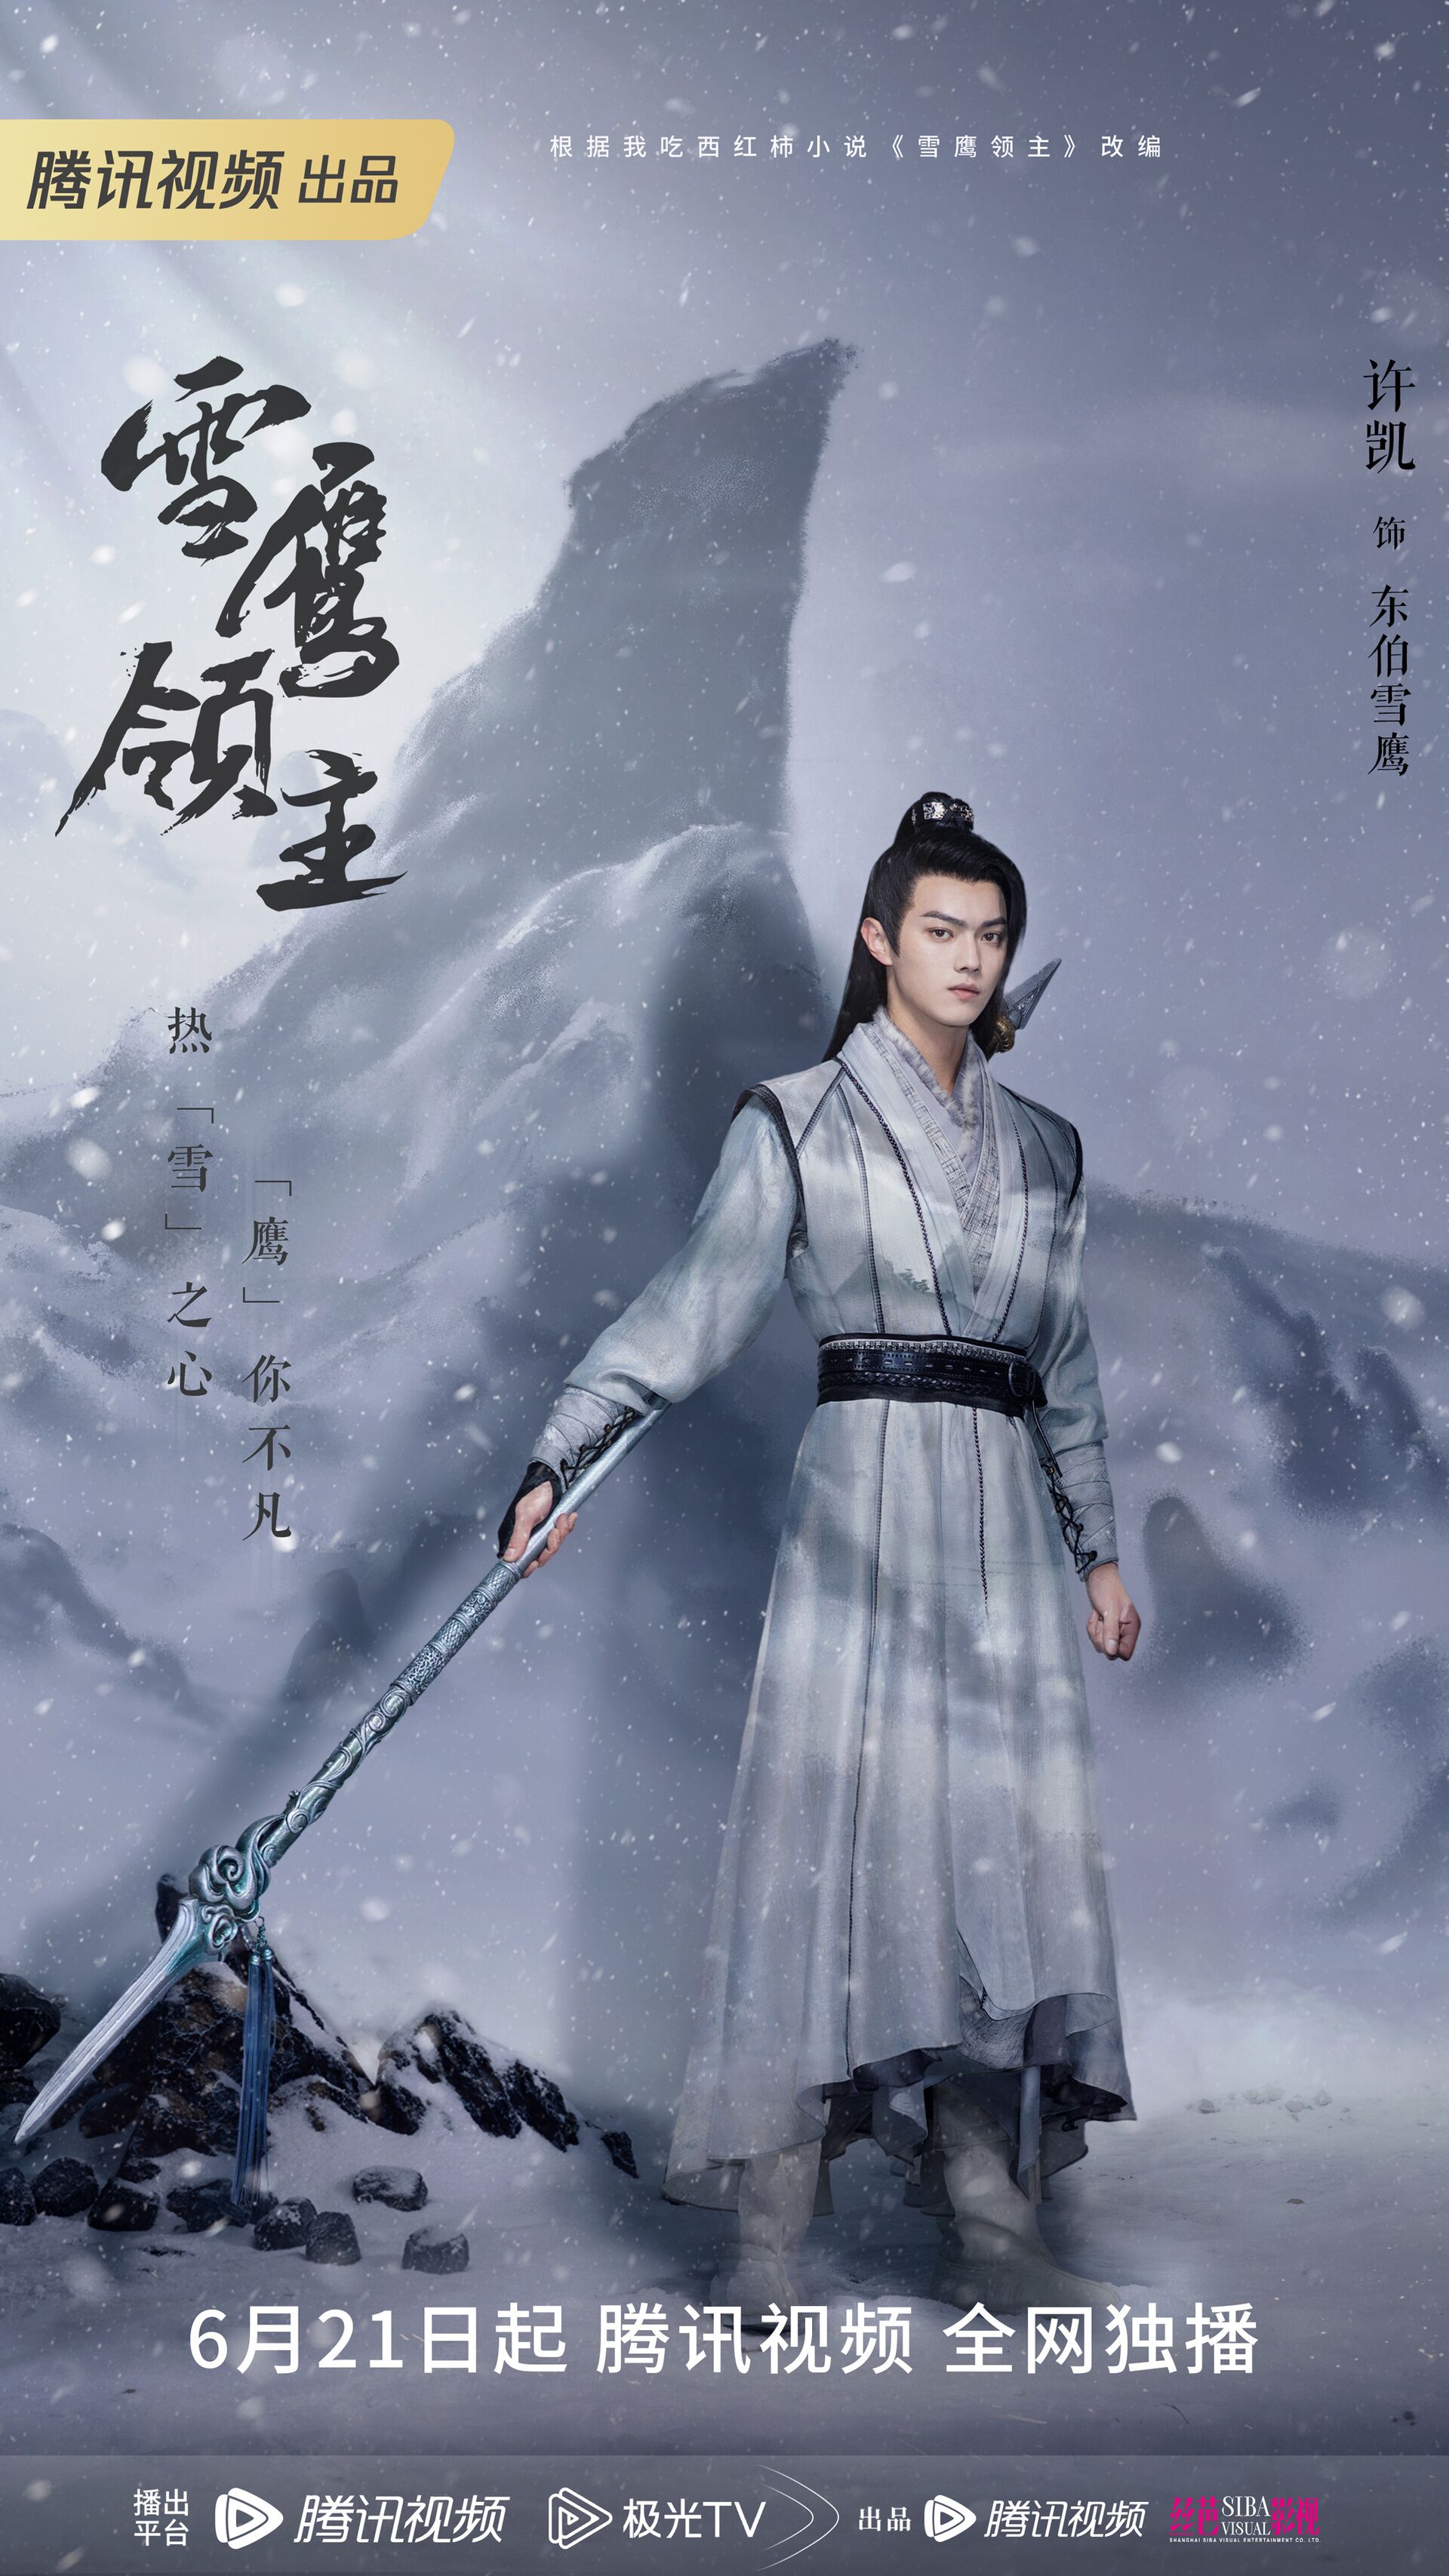 Snow Eagle Lord with Xu Kai